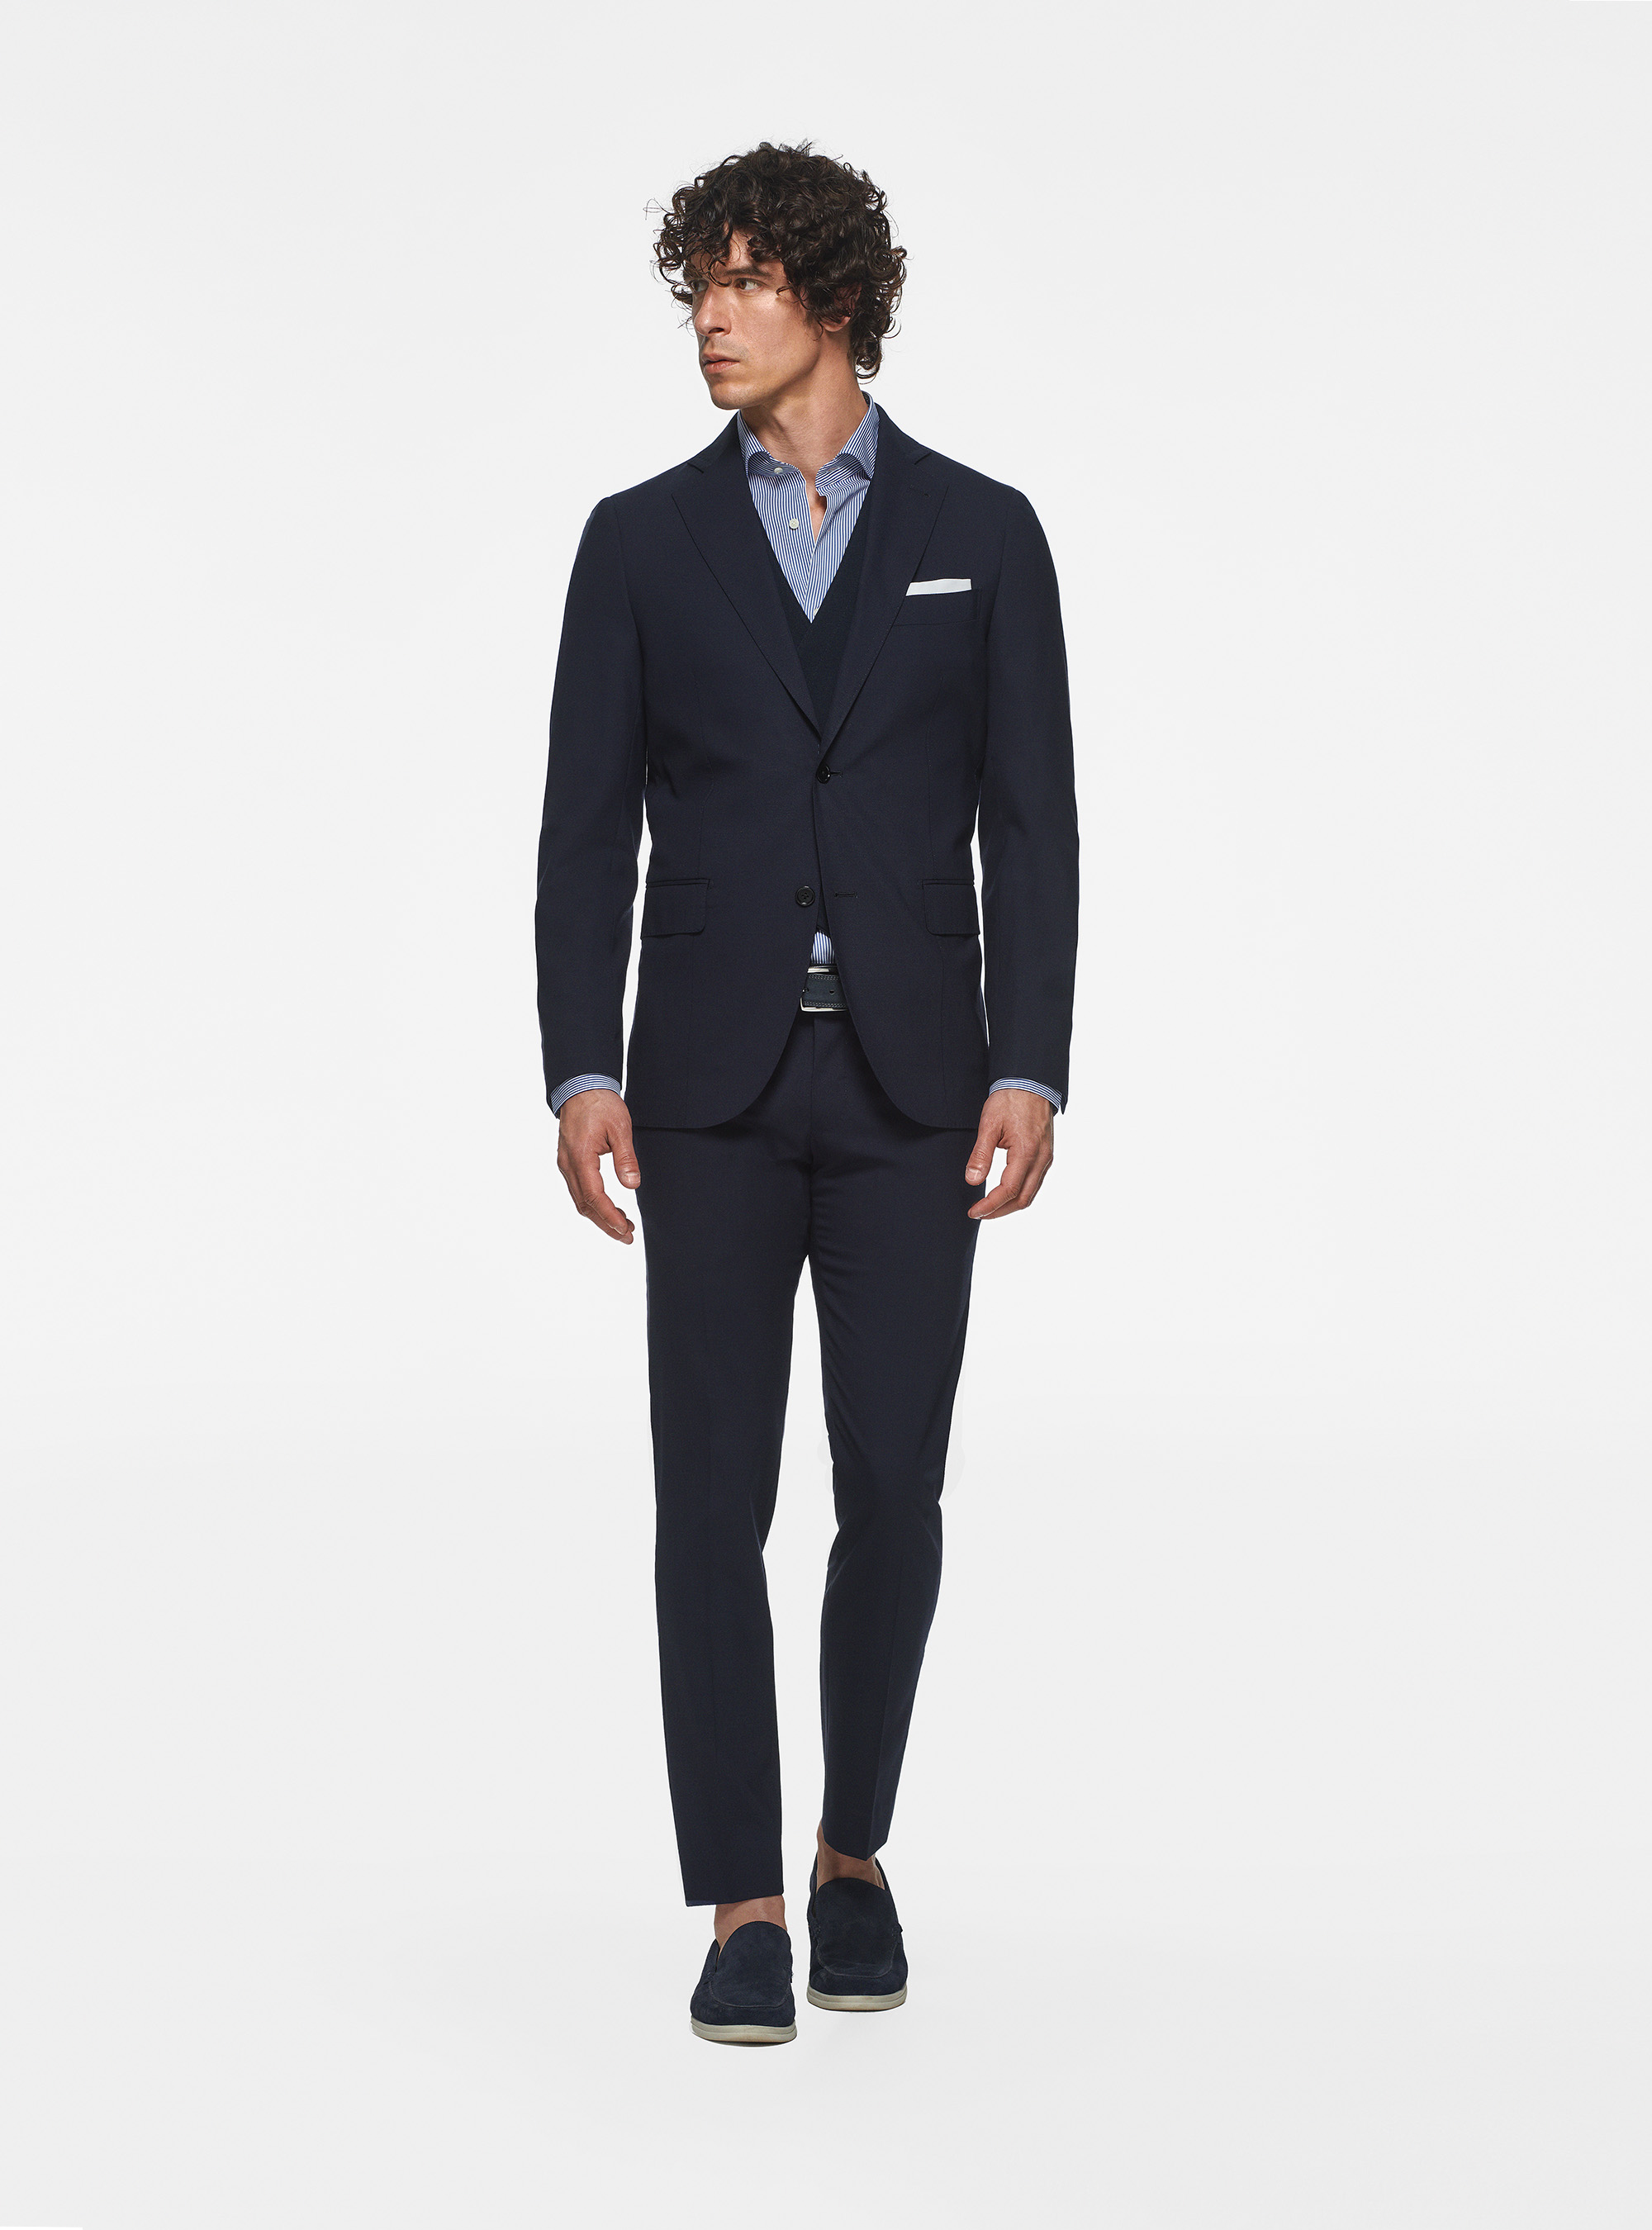 Blazer in pure superfine wool 120 | GutteridgeUK | Men's Suits